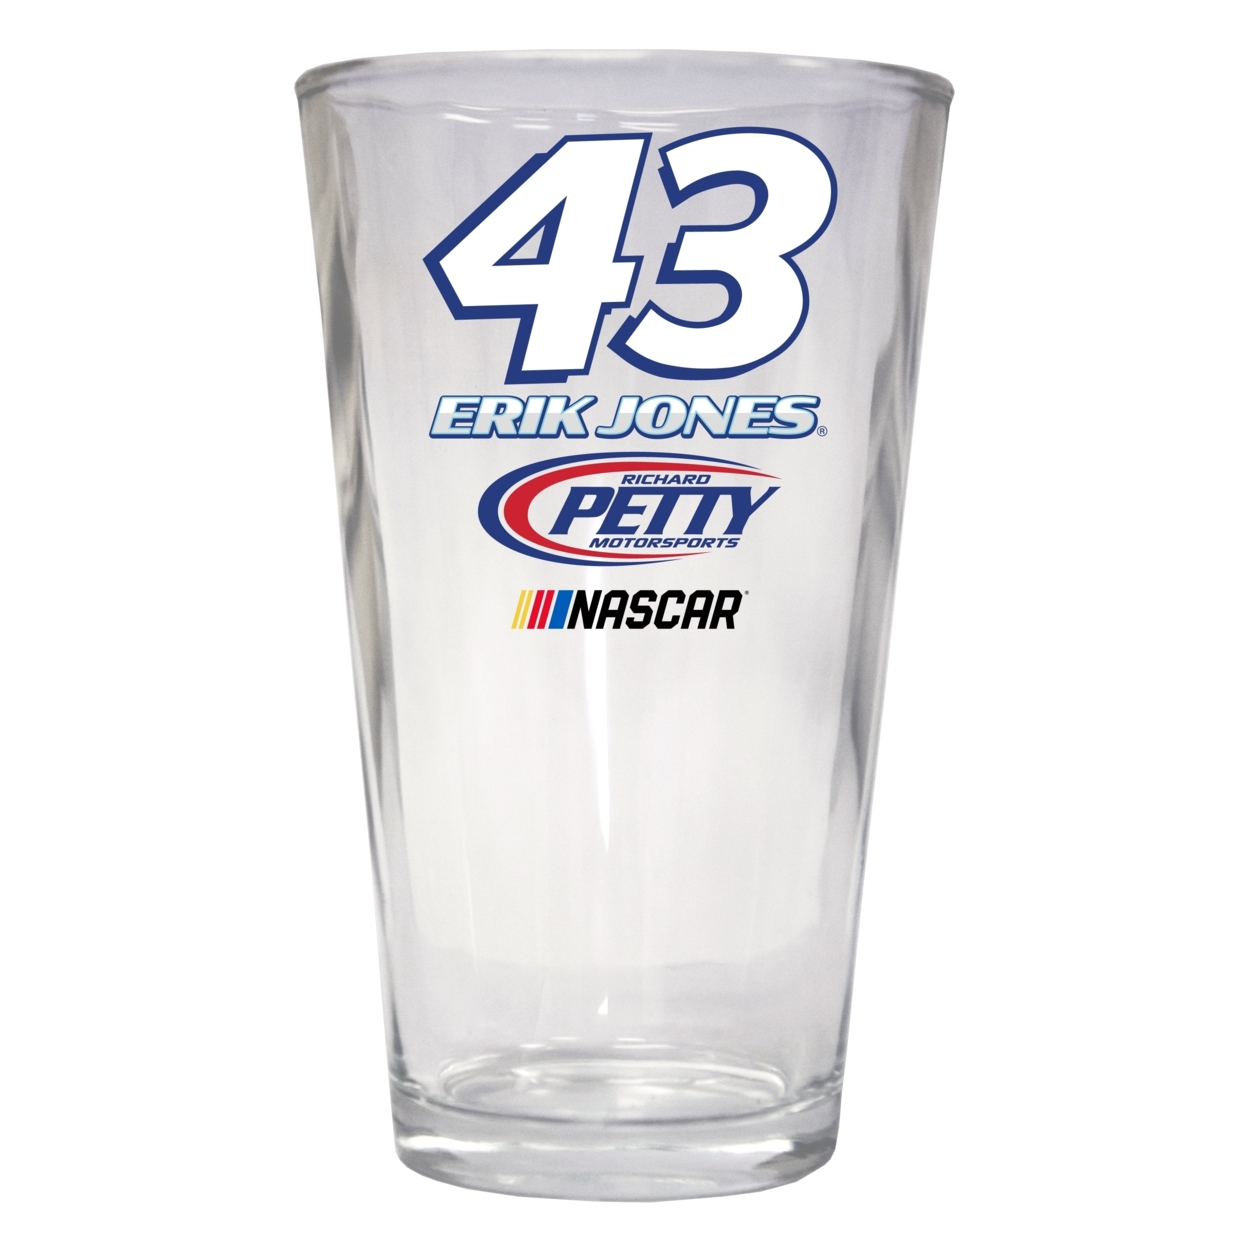 Erik Jones #43 NASCAR Cup Series 16 Oz Pint Glass